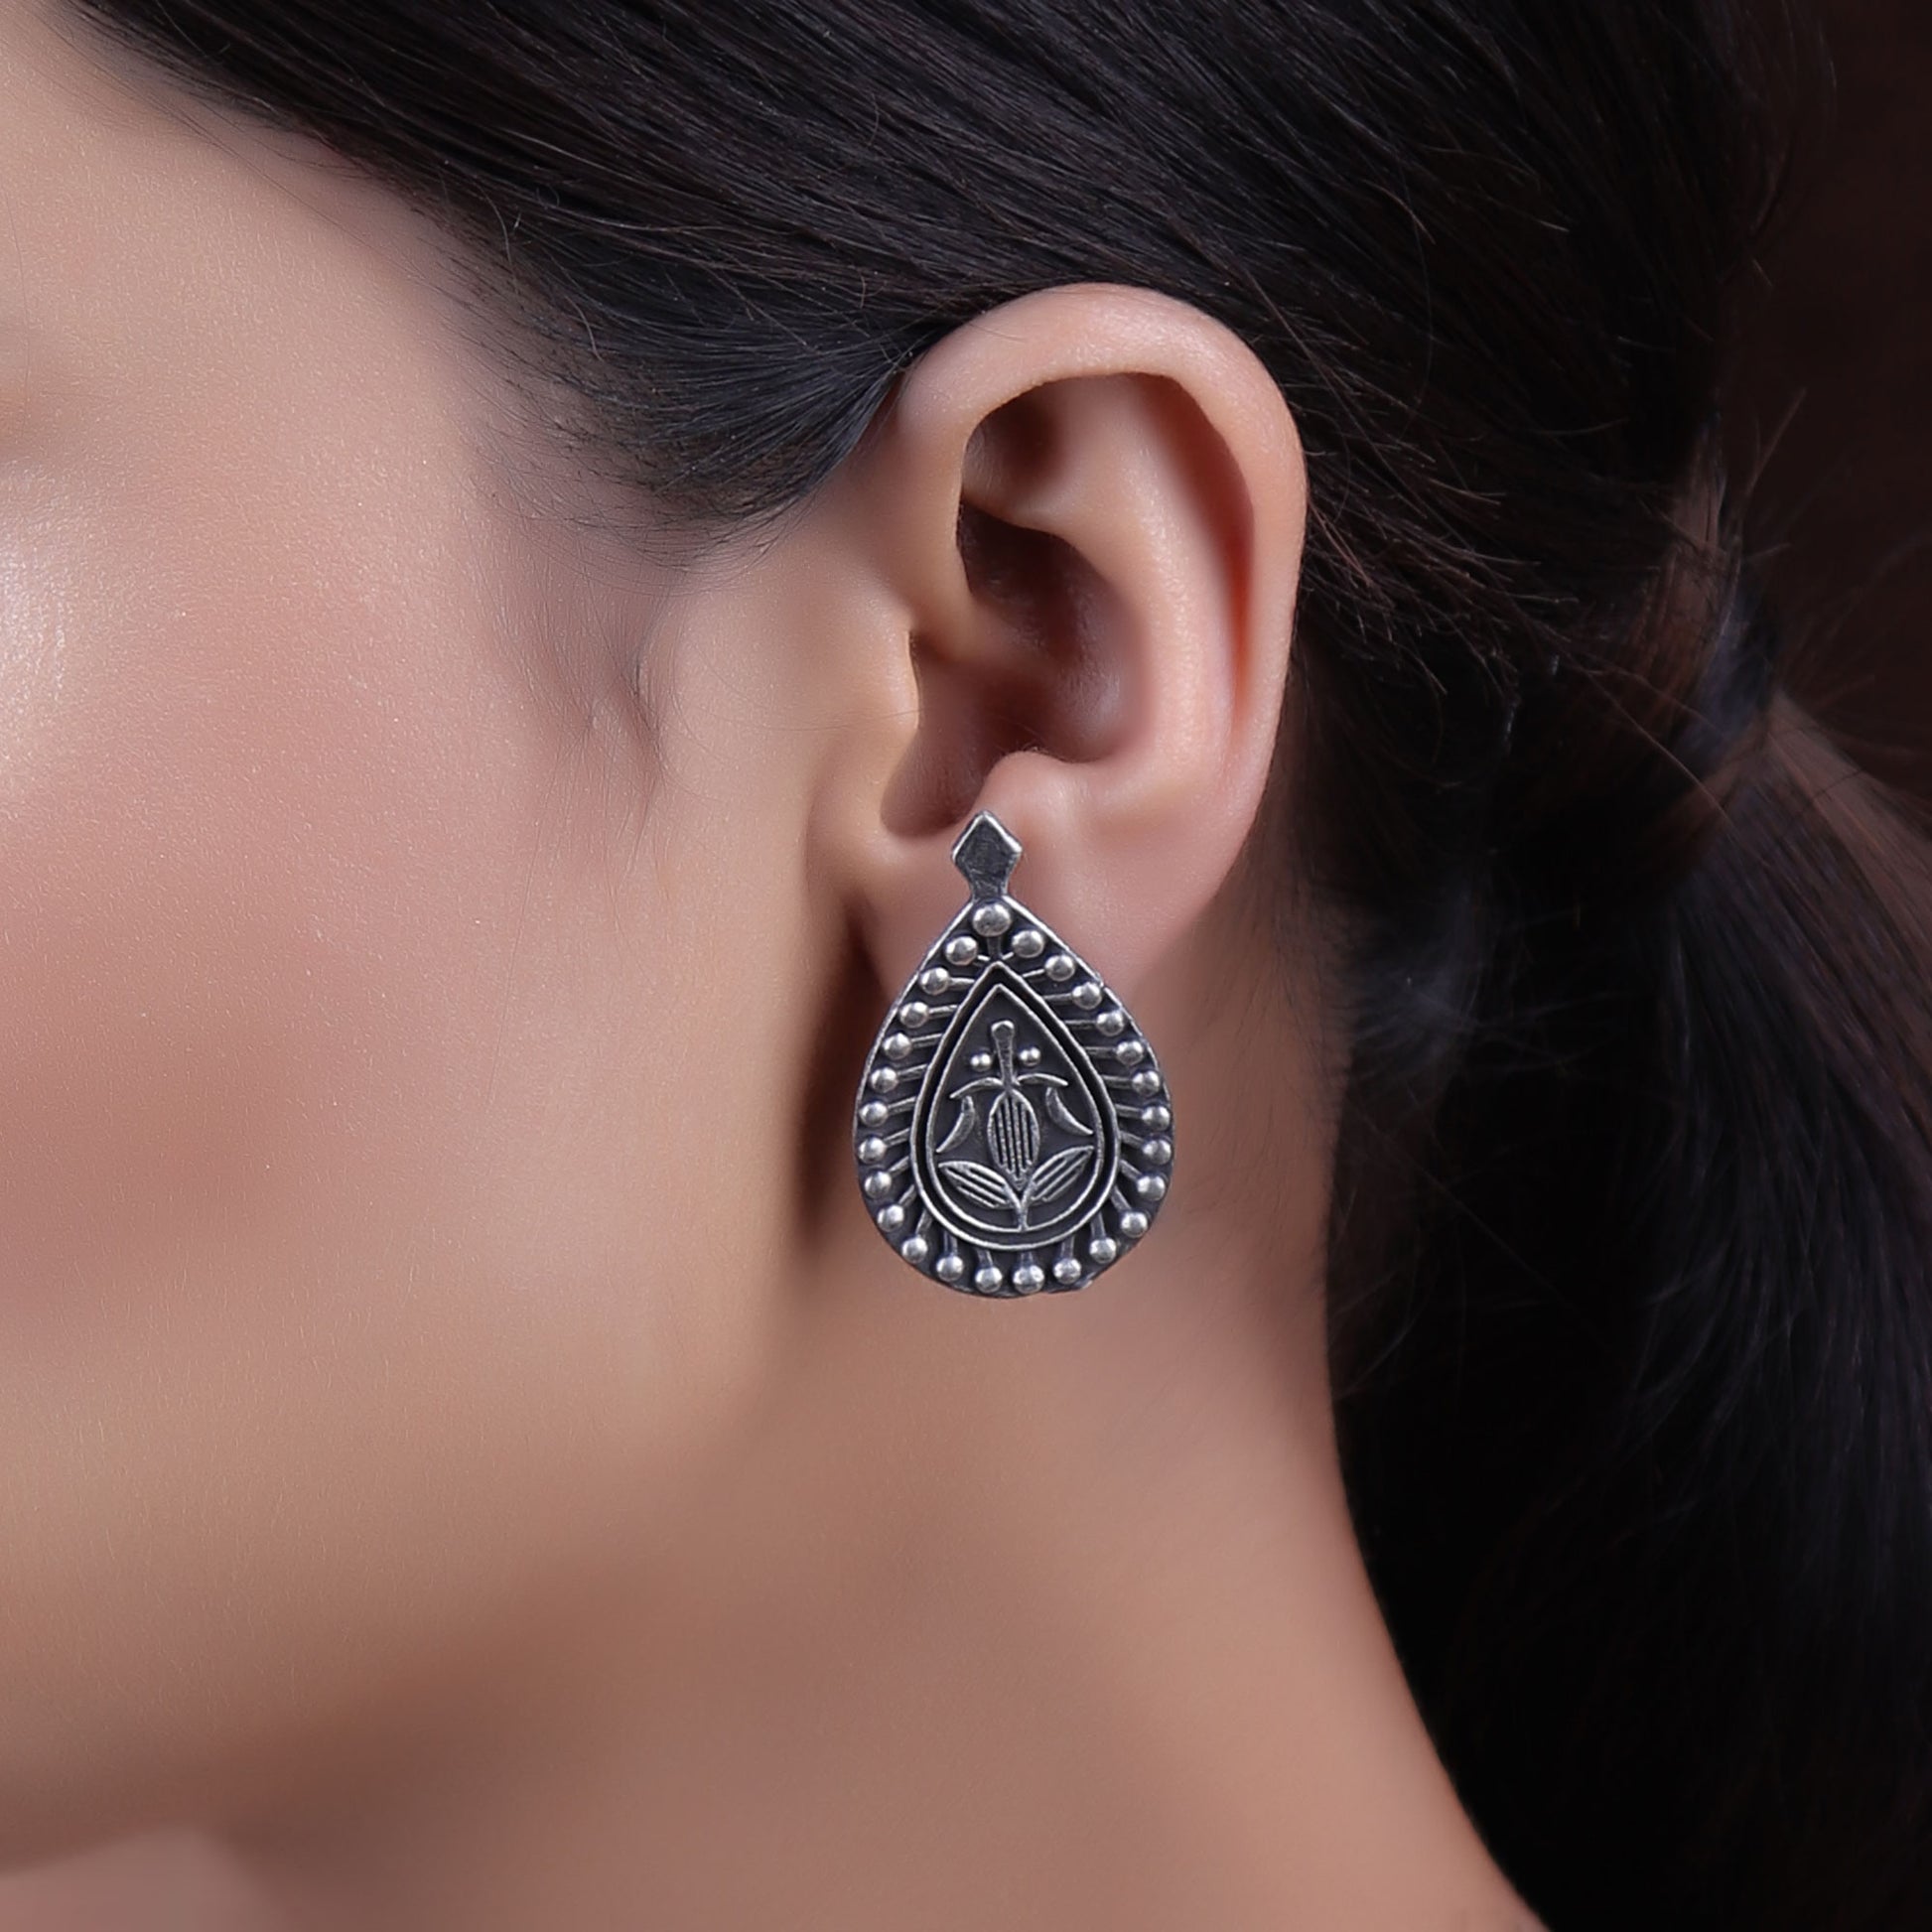 Earrings,The Coral Silver Look Alike Stud - Cippele Multi Store